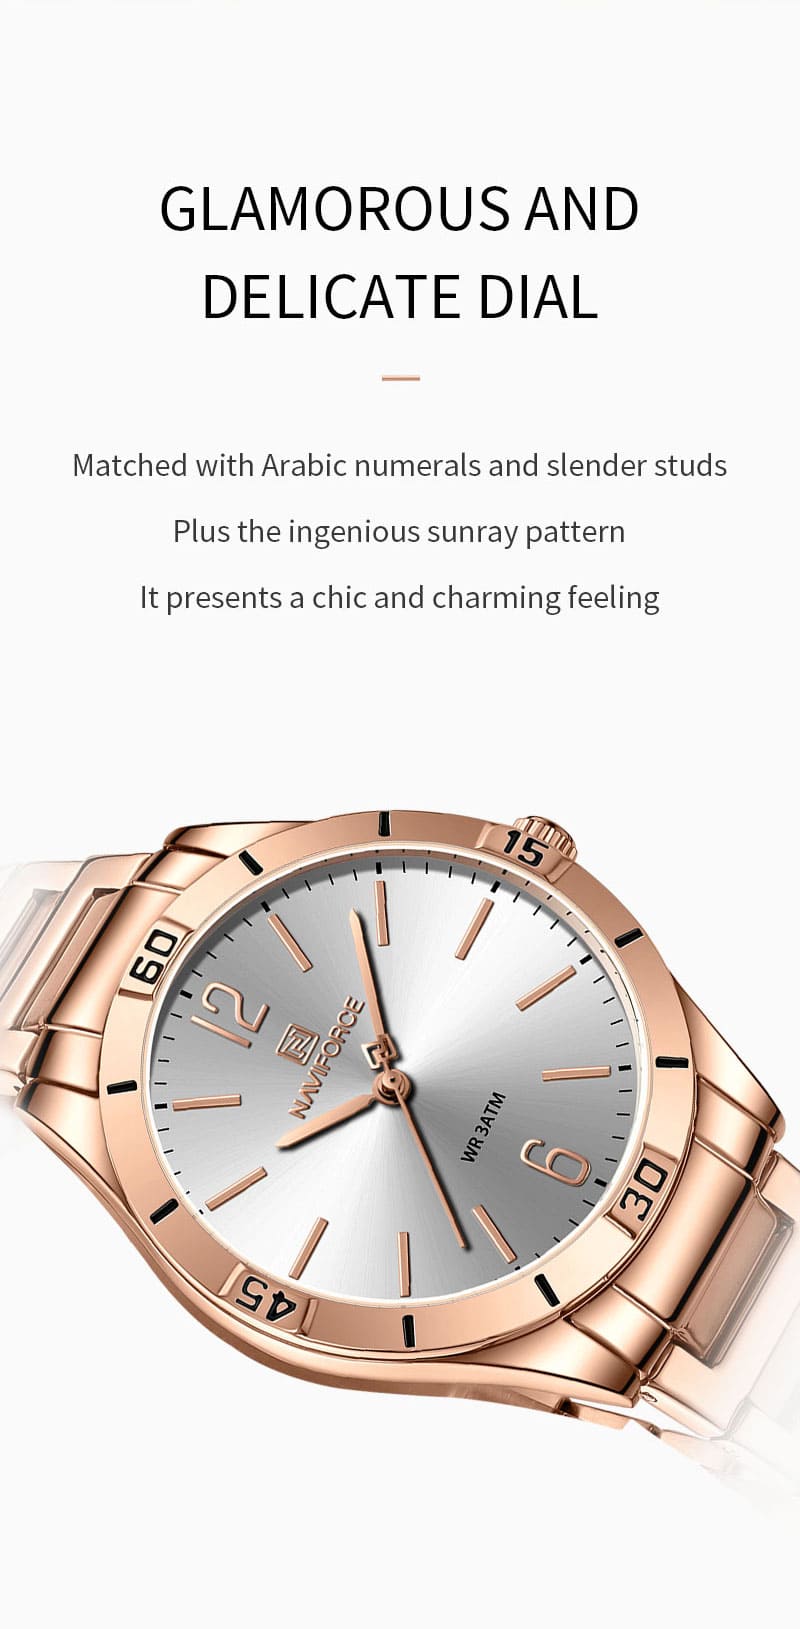 Naviforce Women's Watch NF5029 RG W | Watches Prime